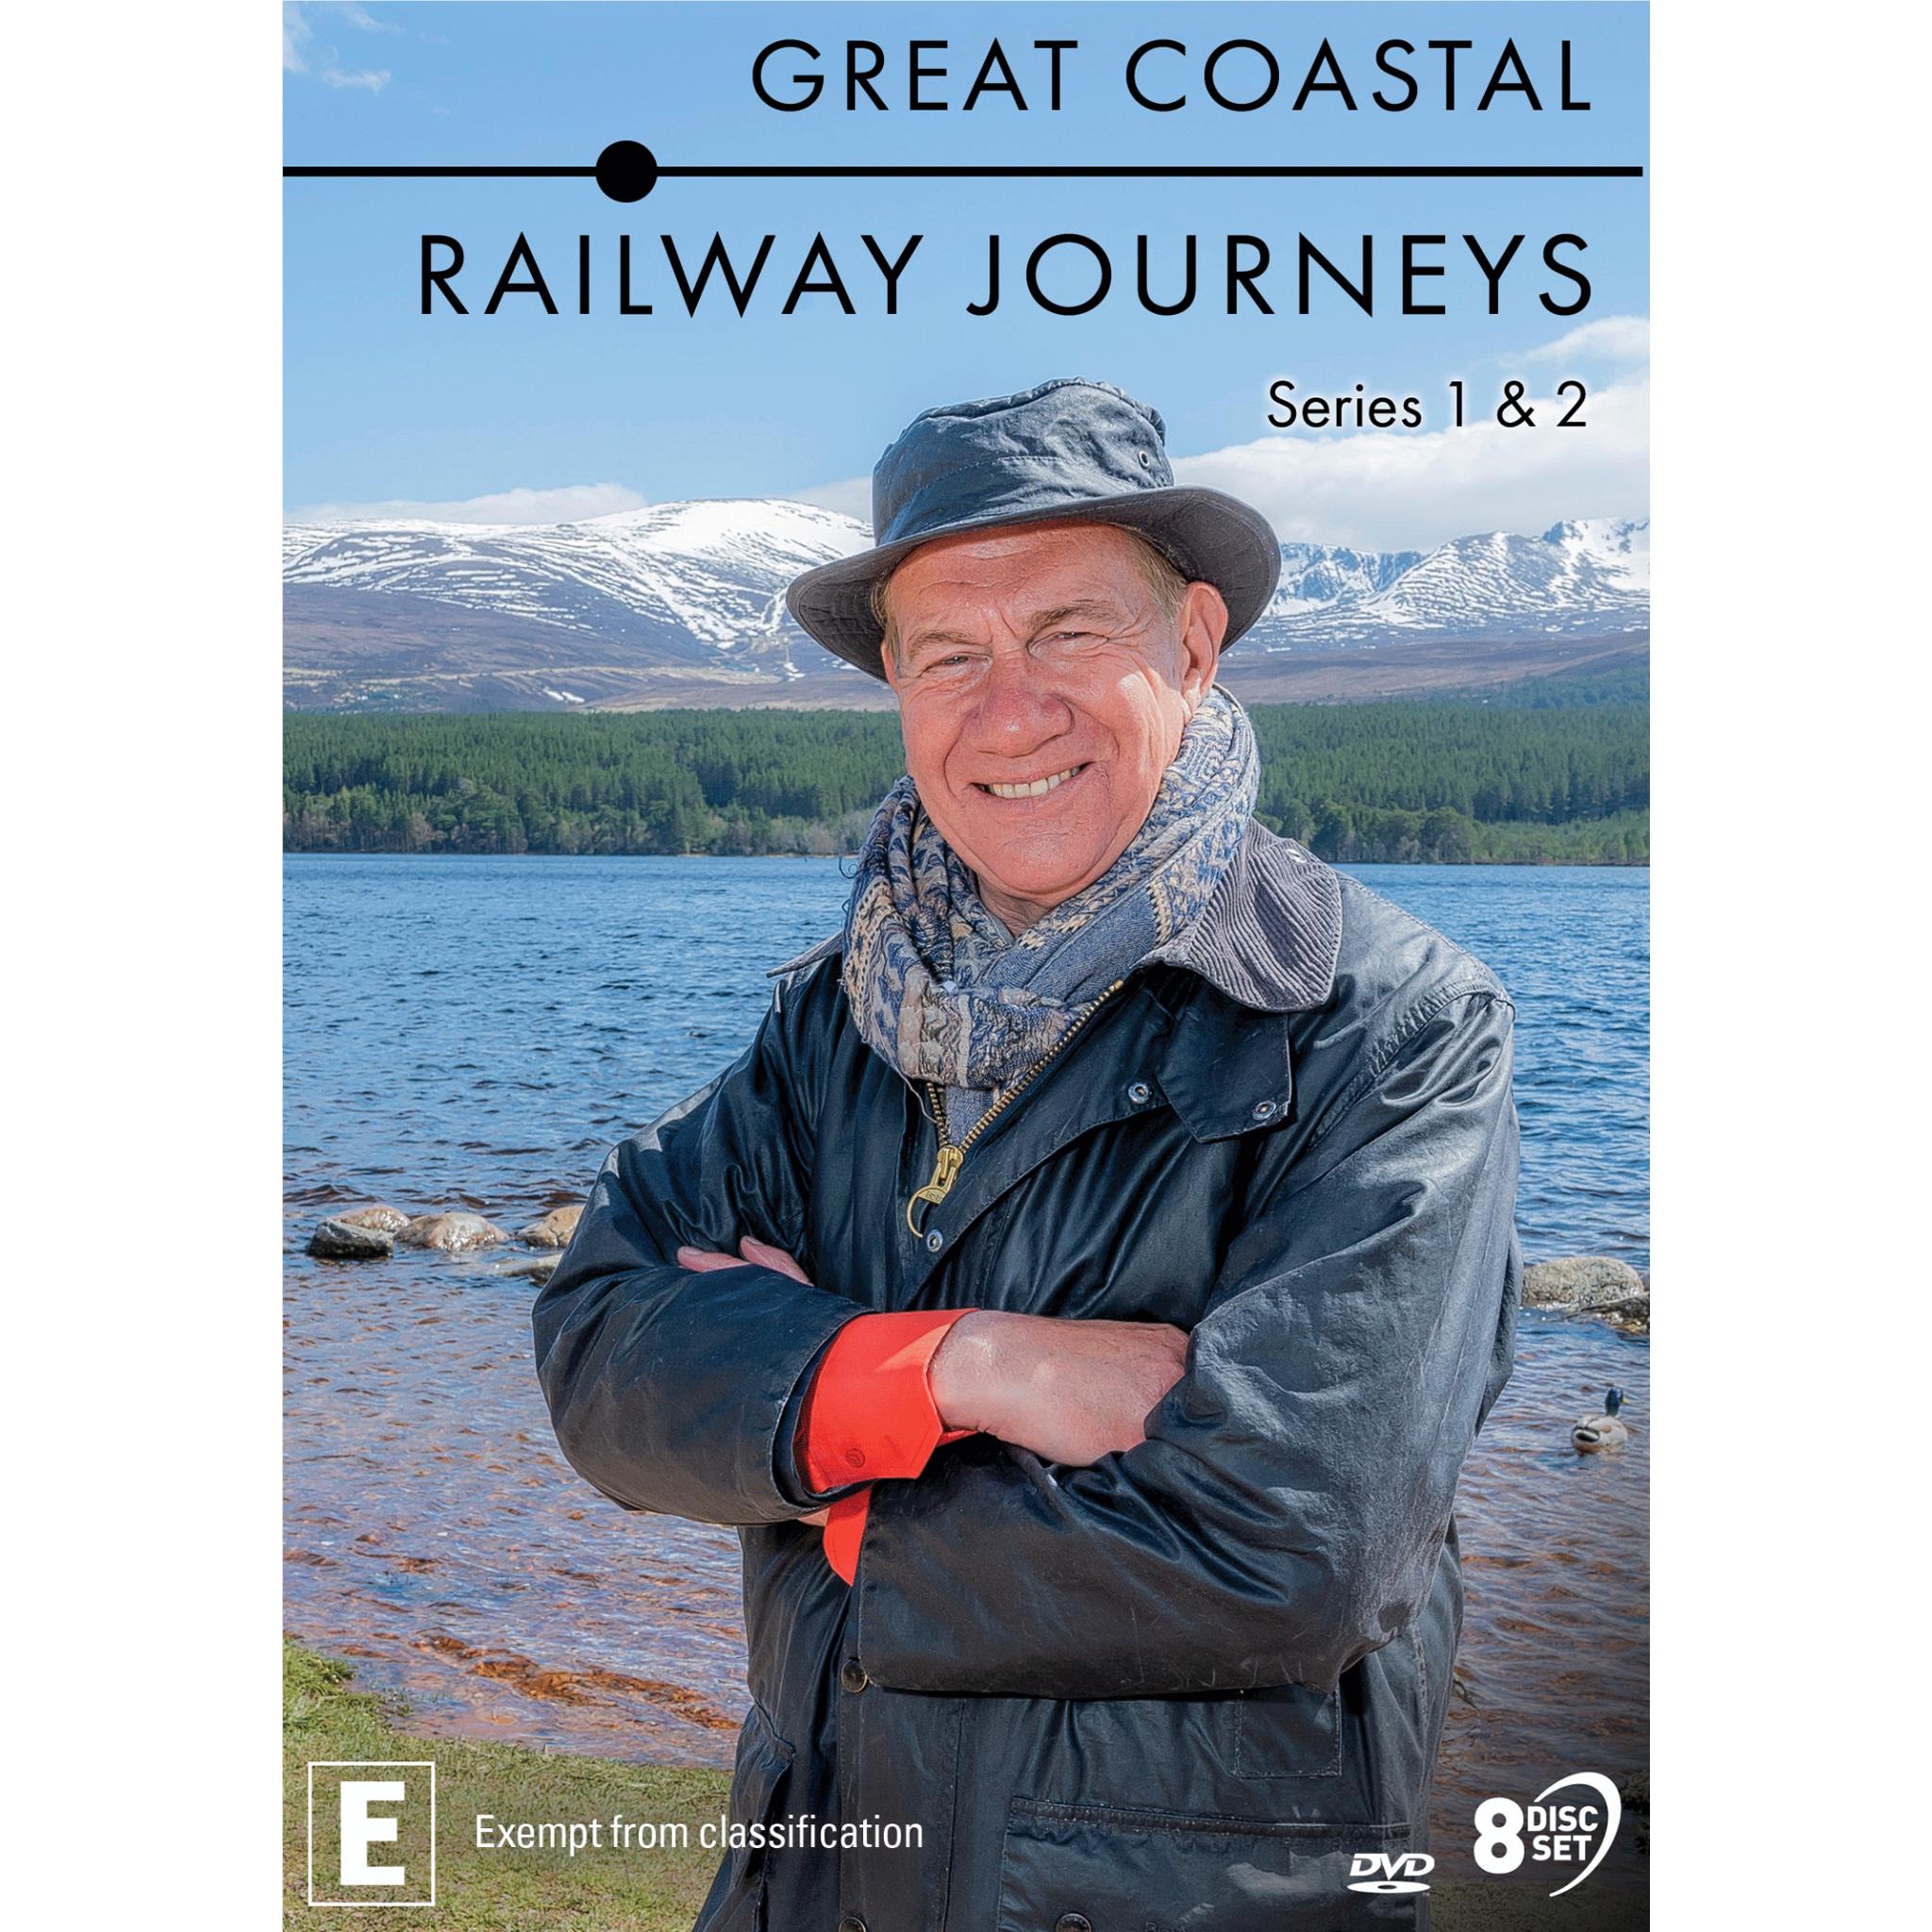 great coastal railway journeys with michael portillo - series 1 & 2